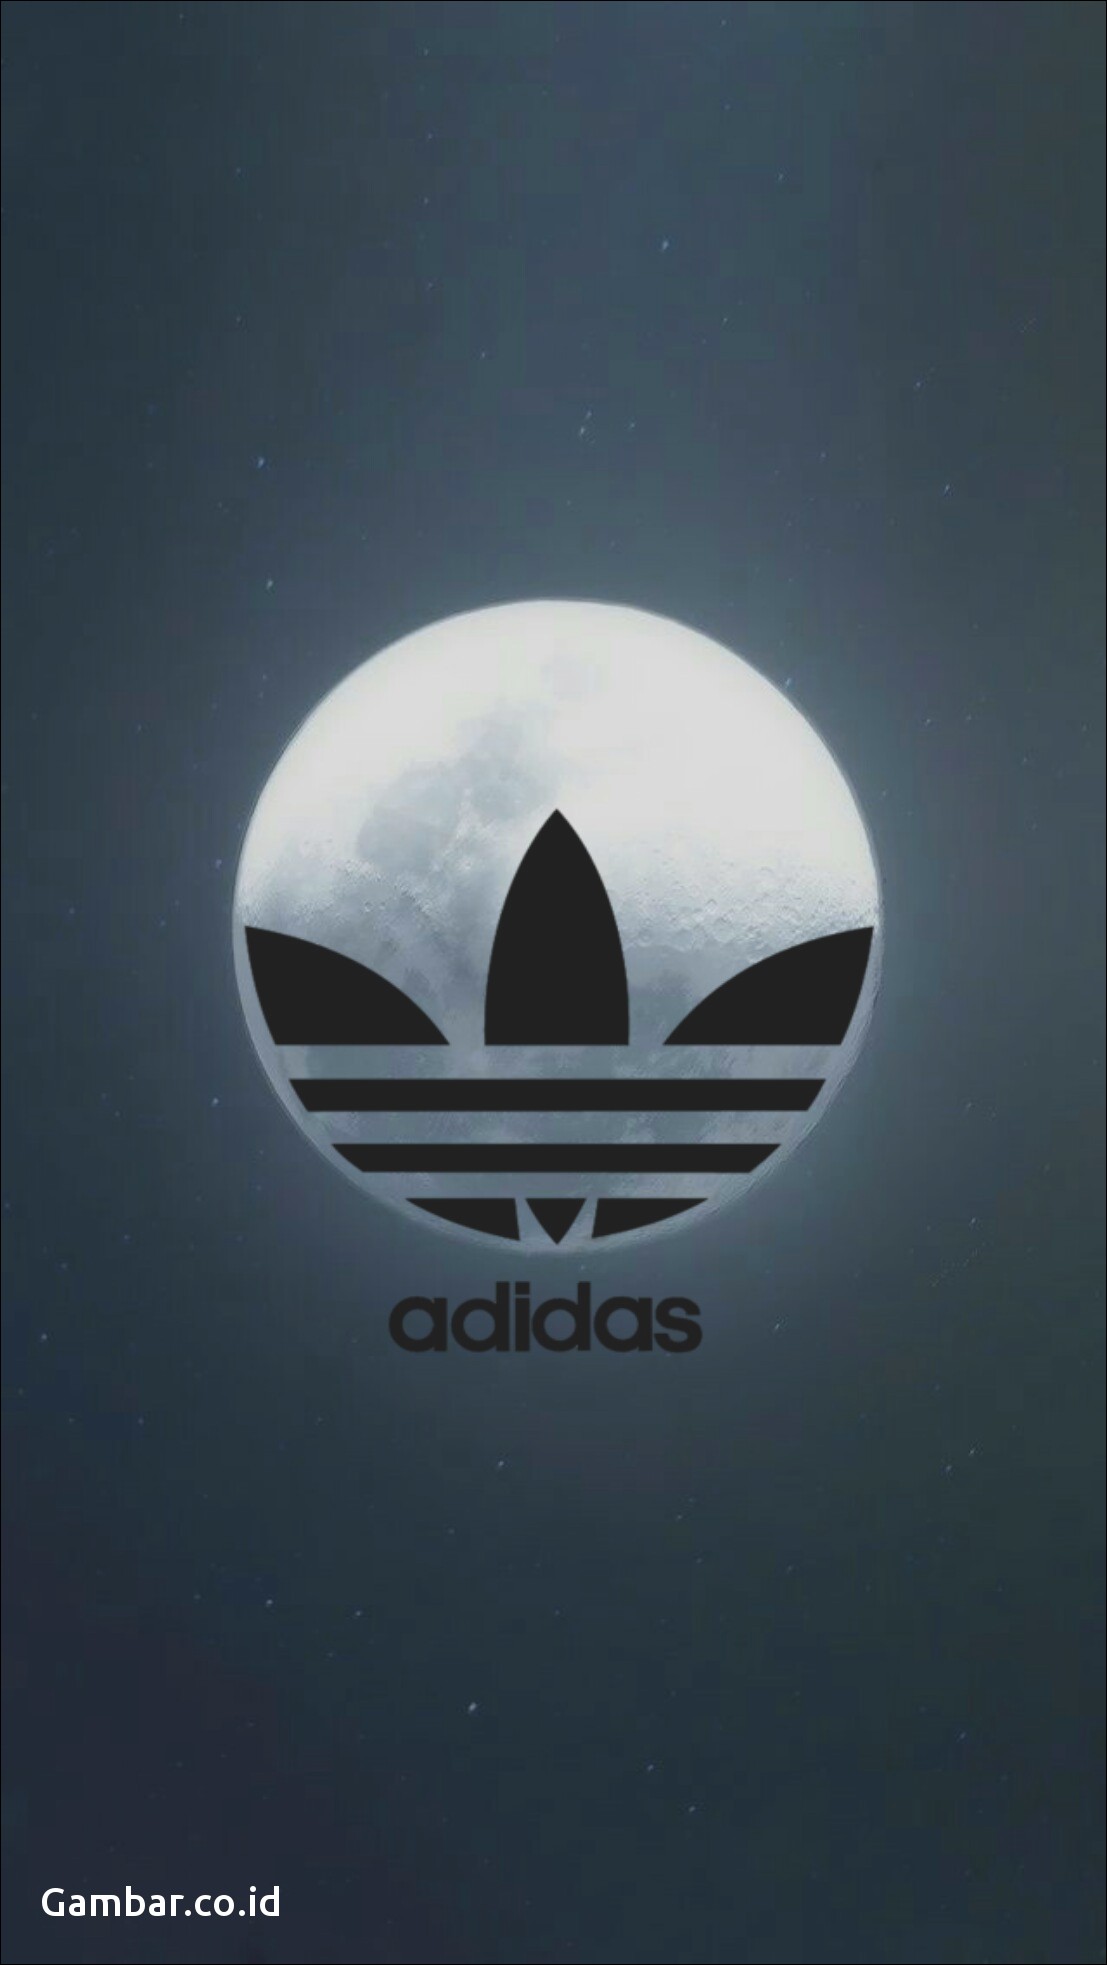 adidas logo wallpaper iphone